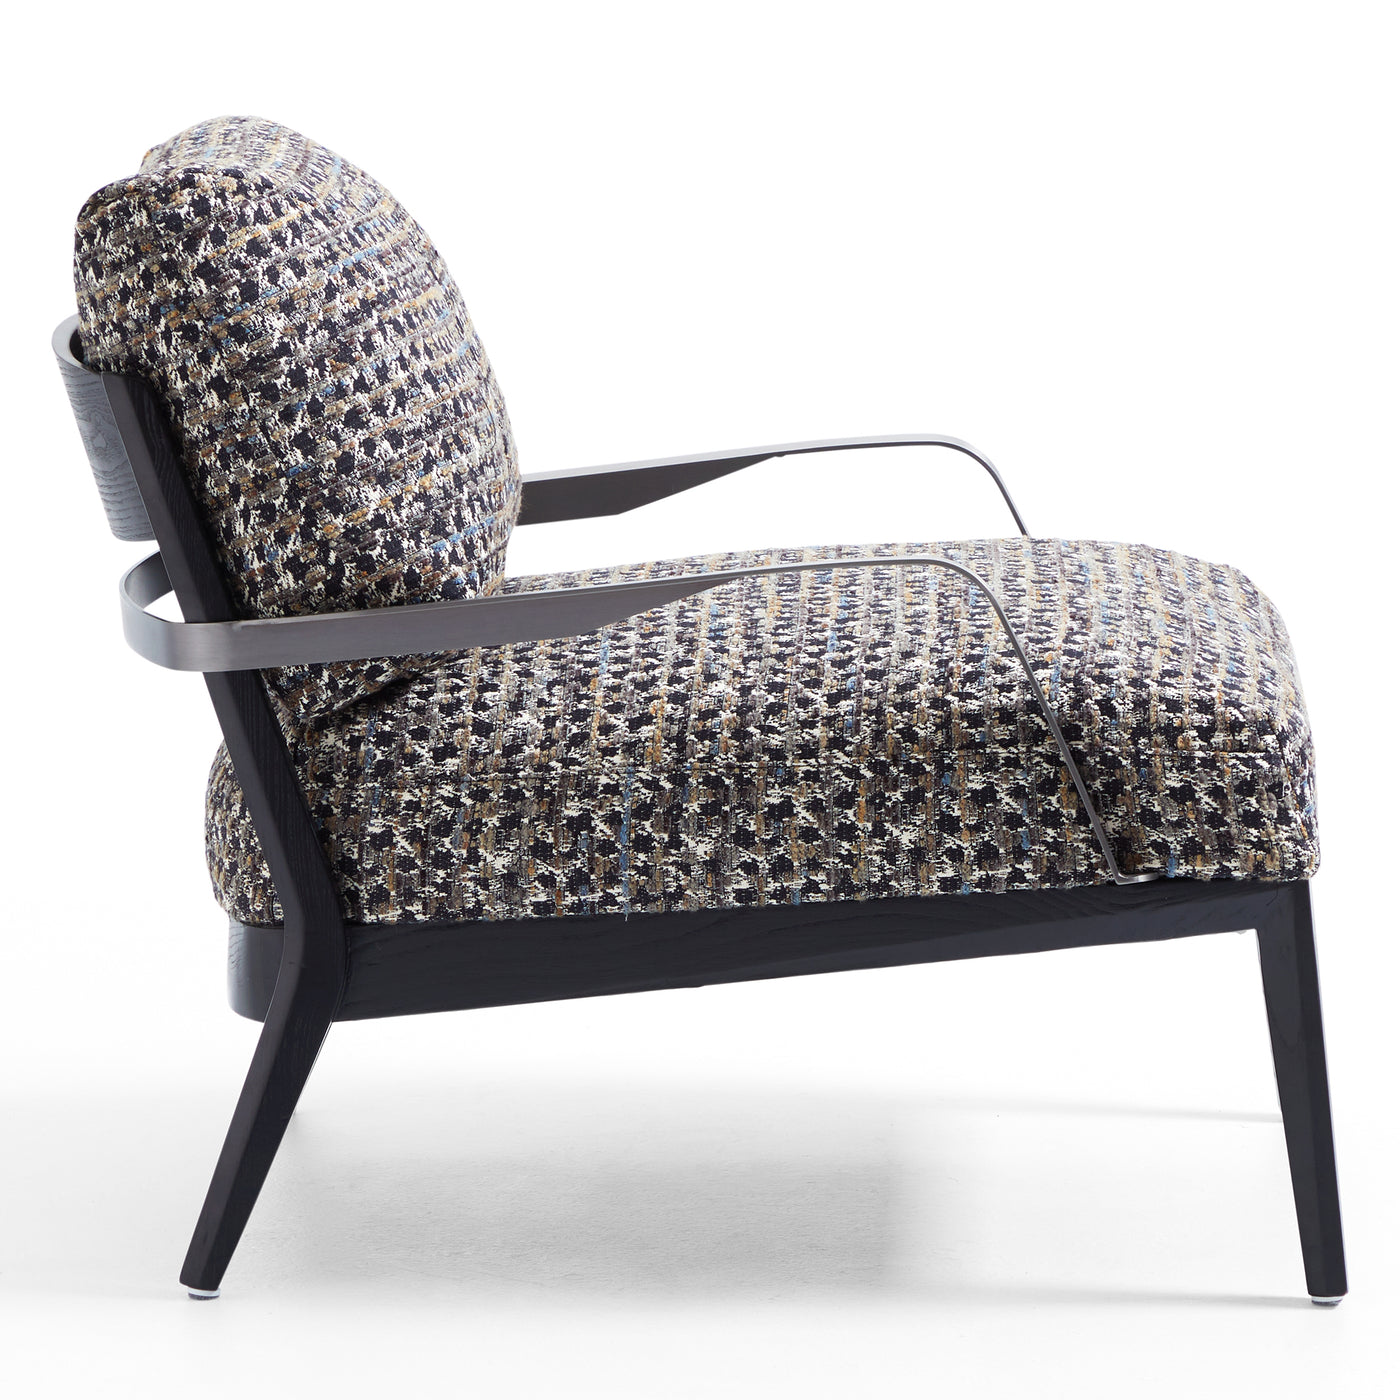 Charcoal Gary Flax Linen Minimalist Leisure Chair-Black